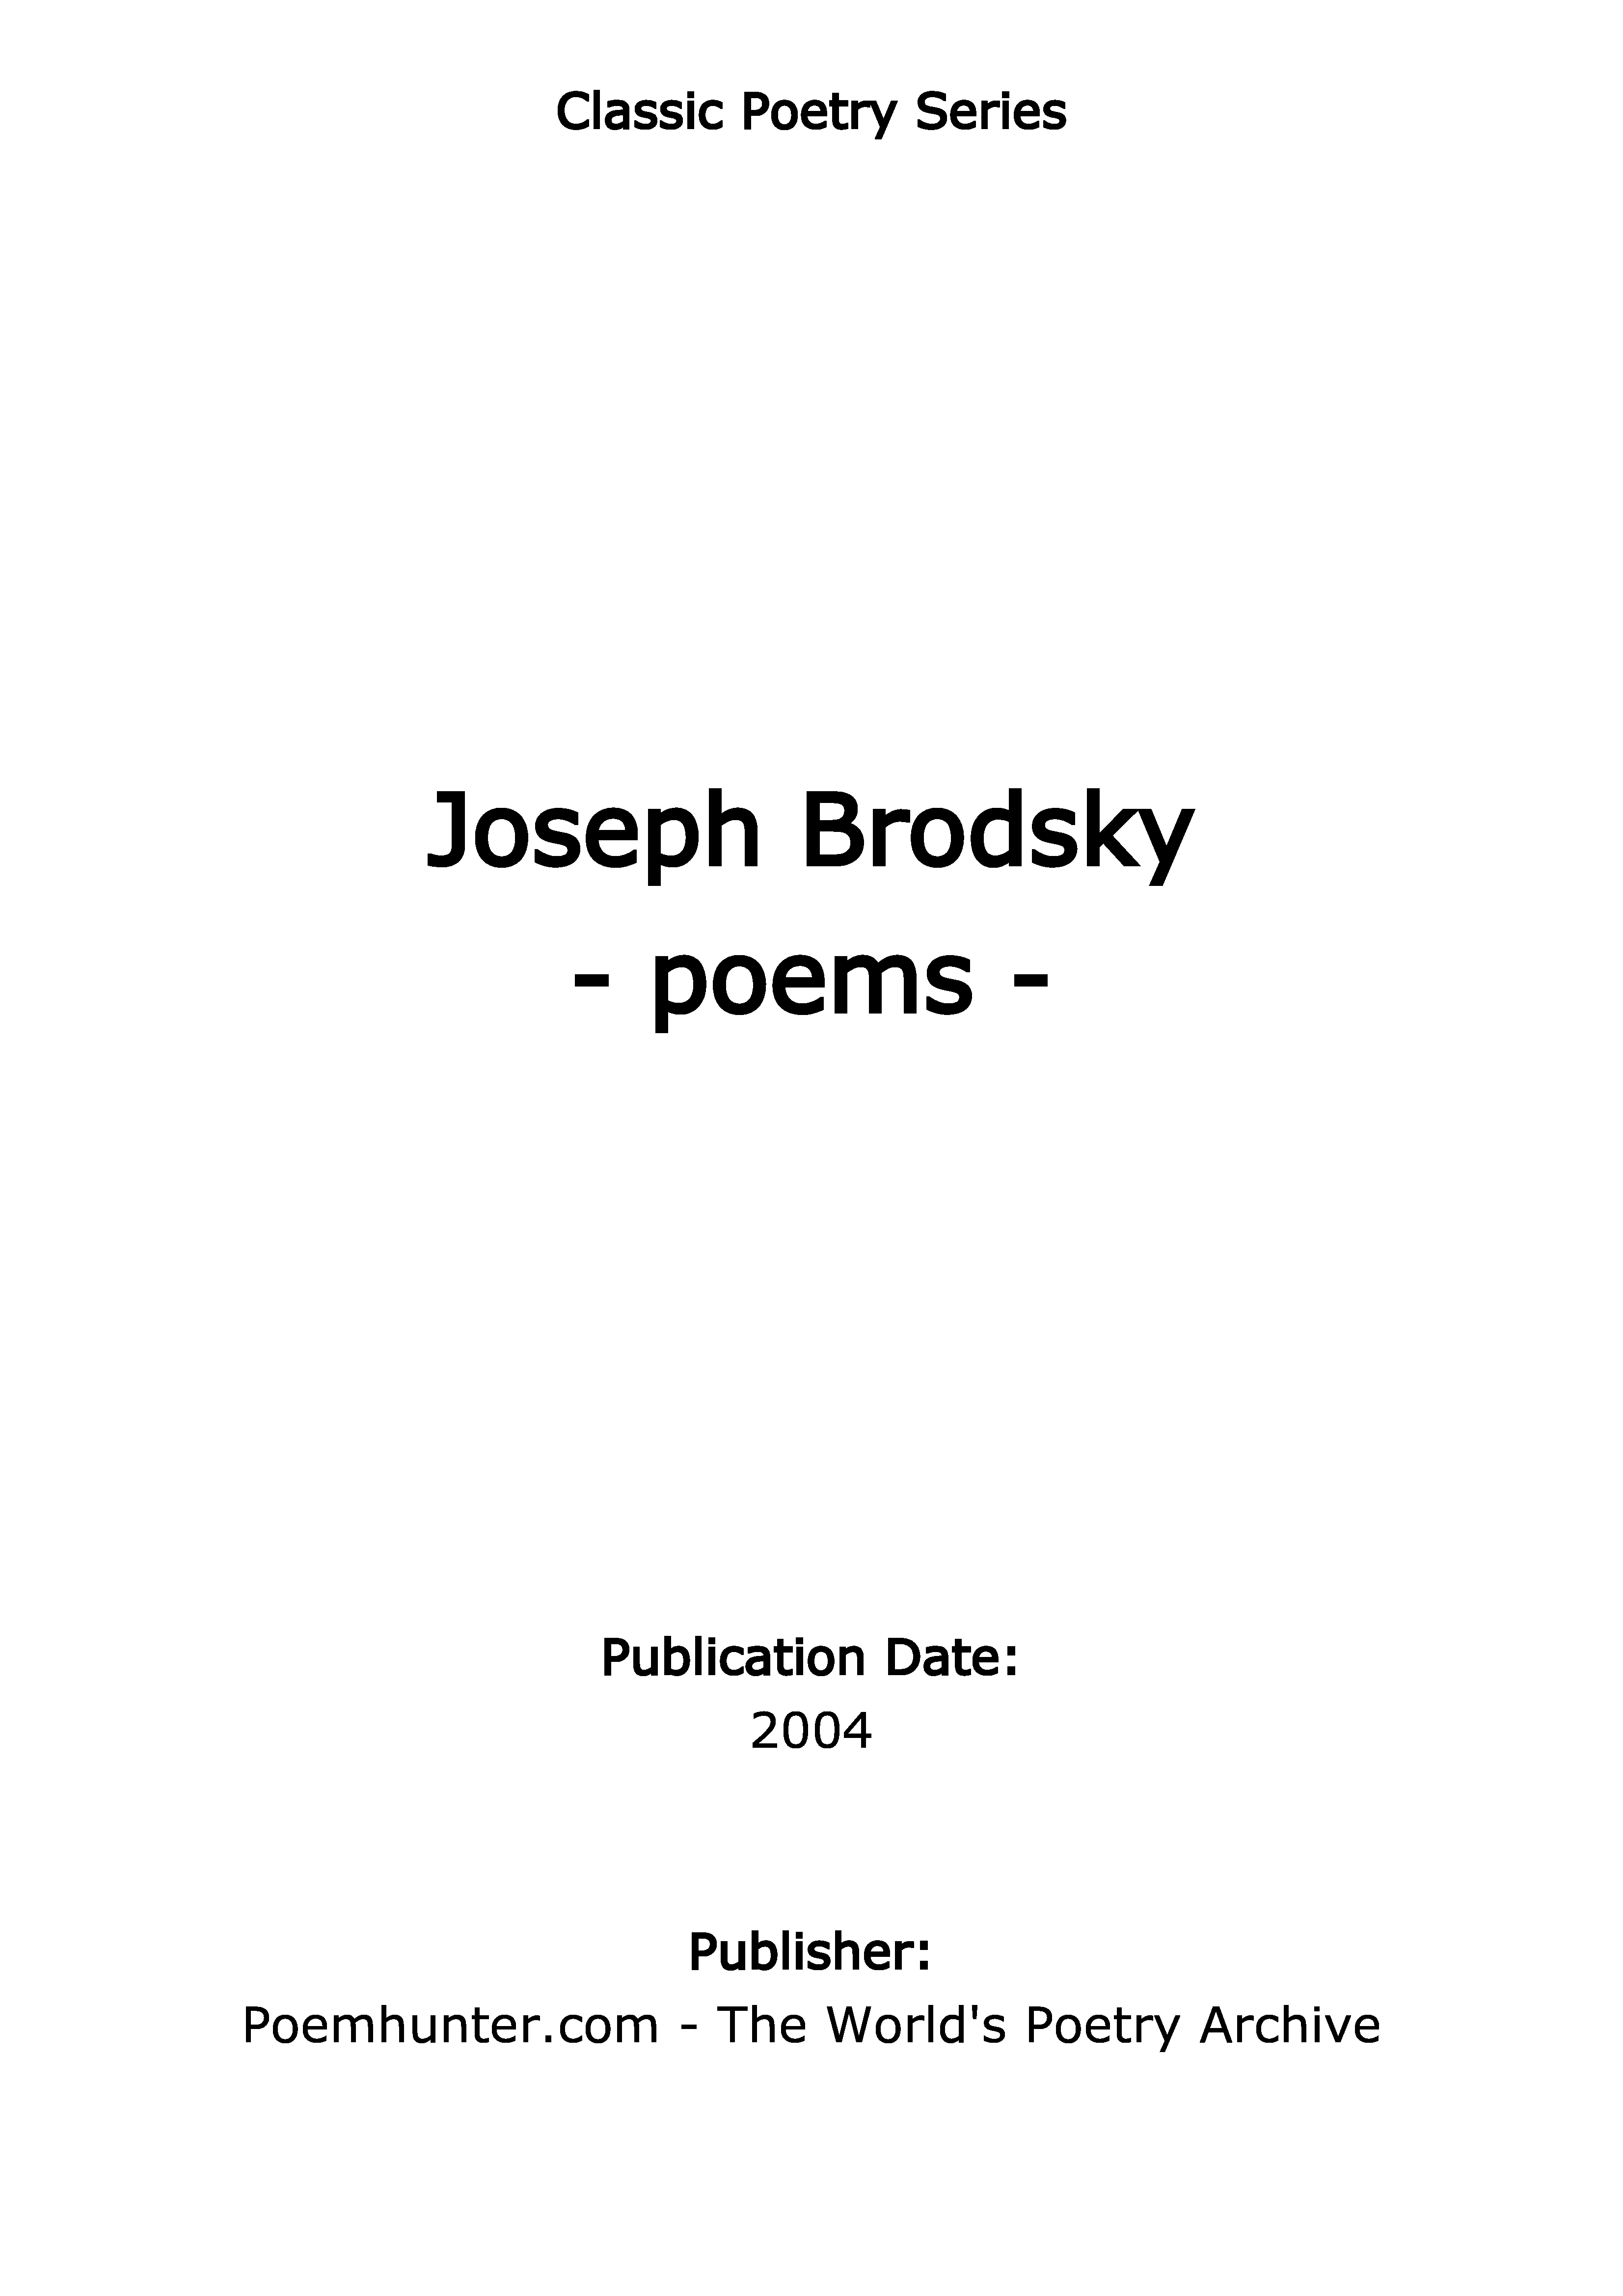 Joseph Brodsky - poems -